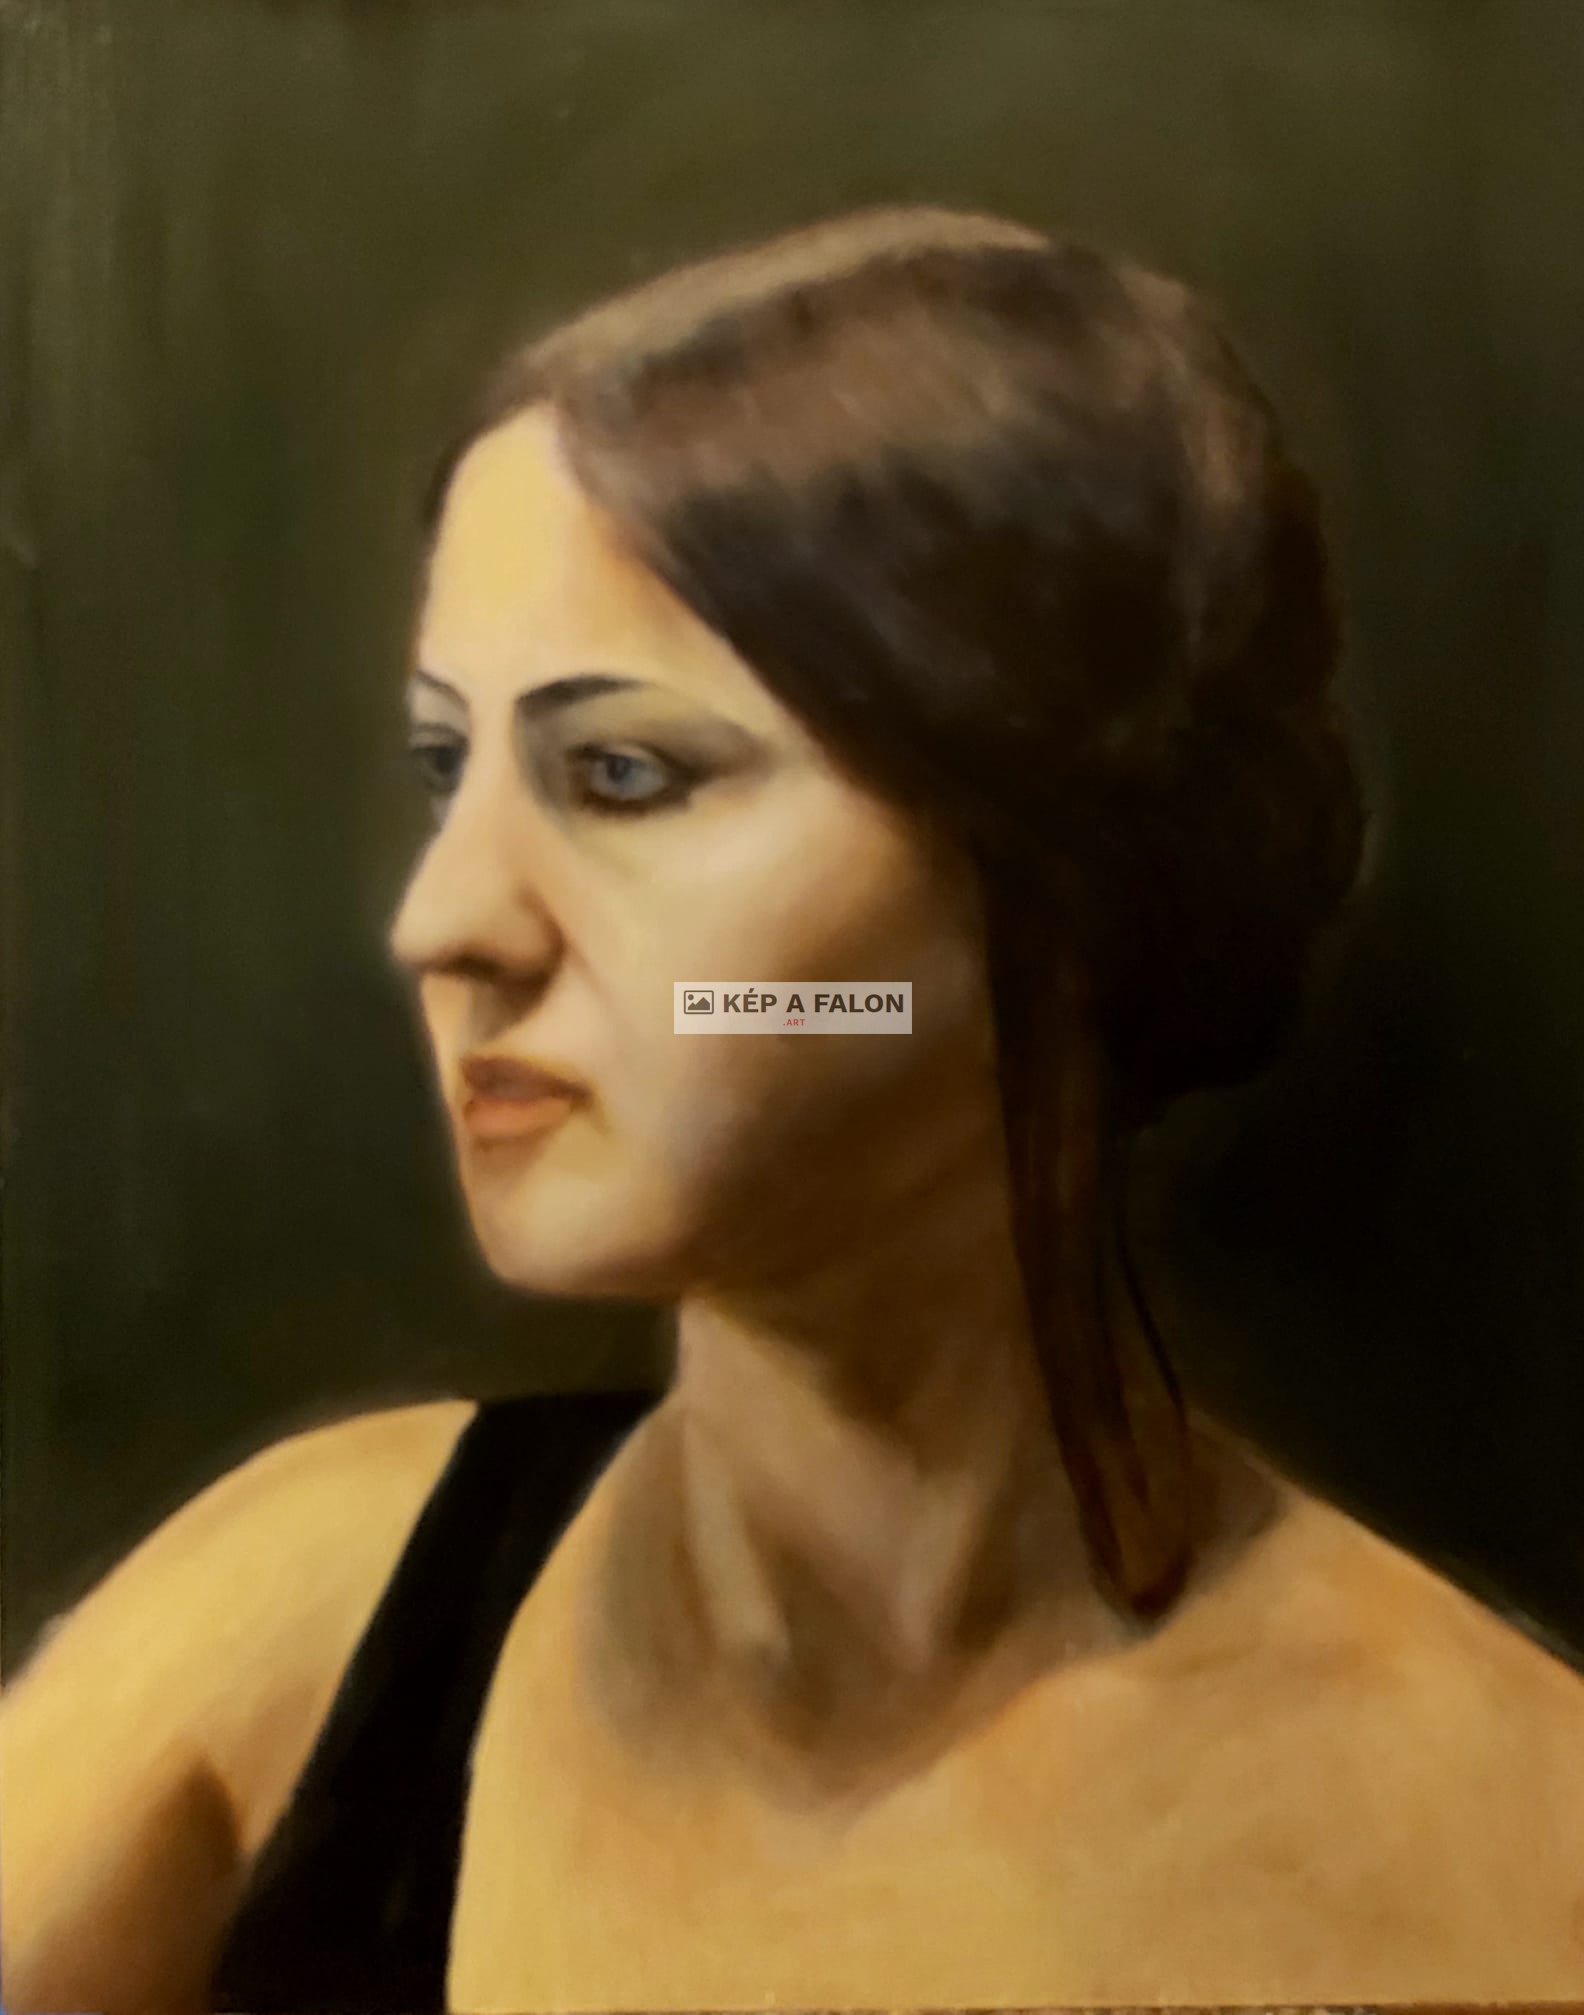 Cesar Santos portré 3 by: Horgász  Csaba  | 2020, olaj festmény